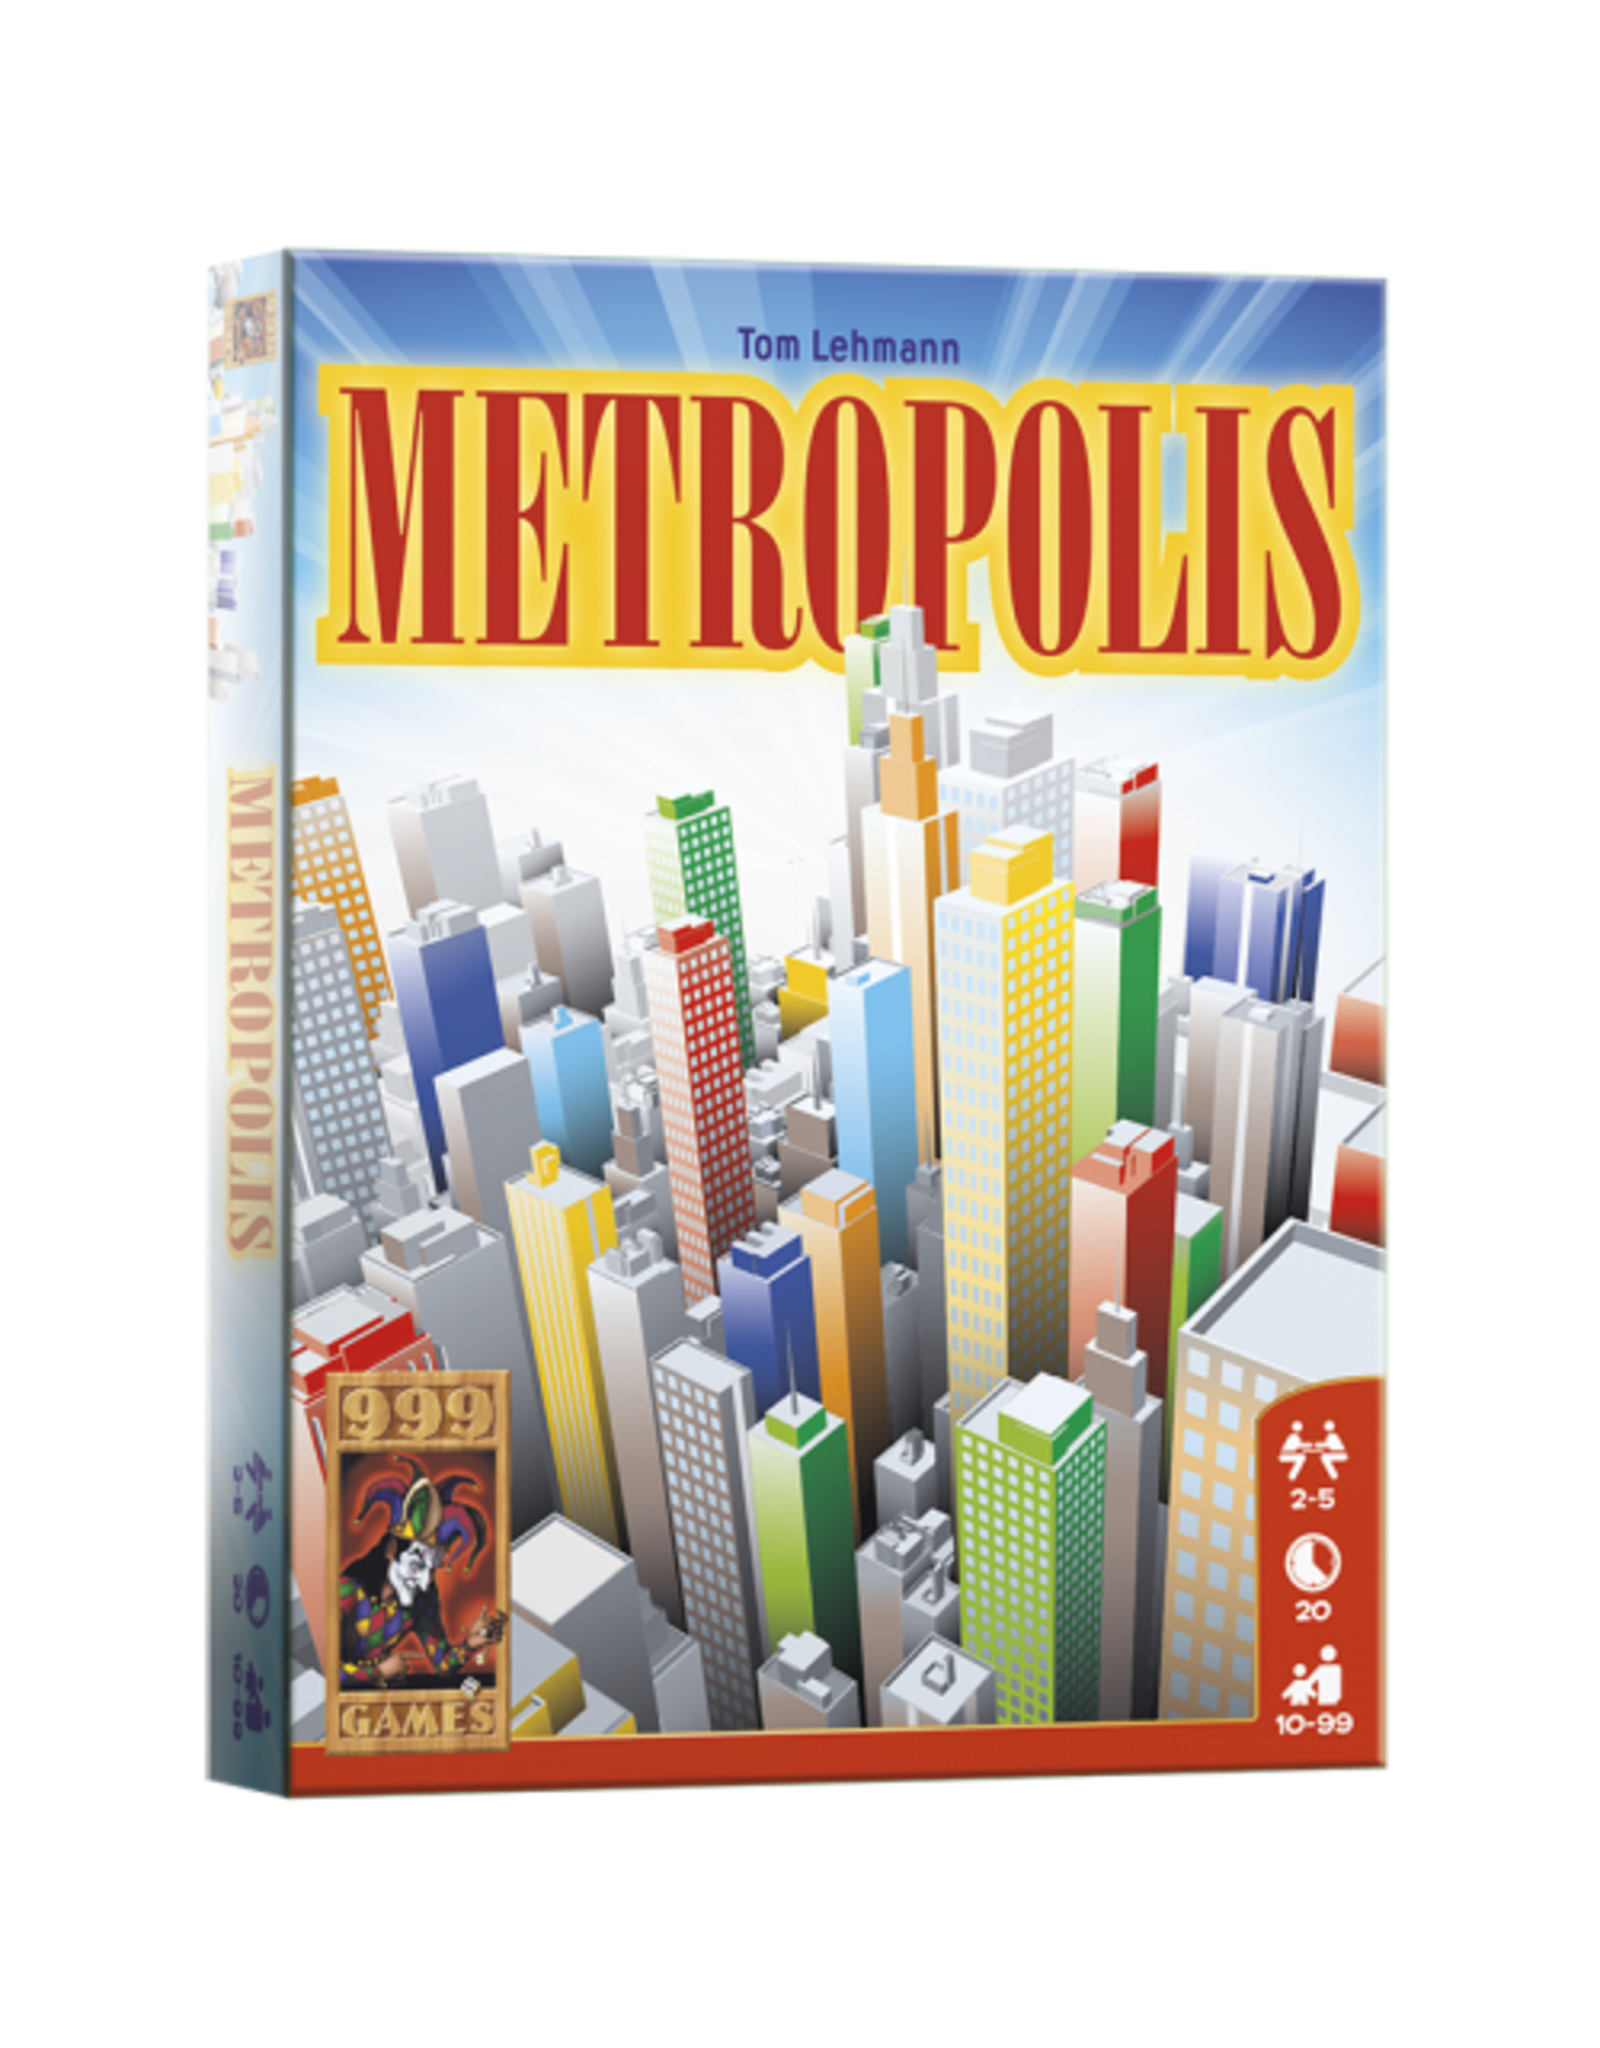 999 GAMES Metropolis